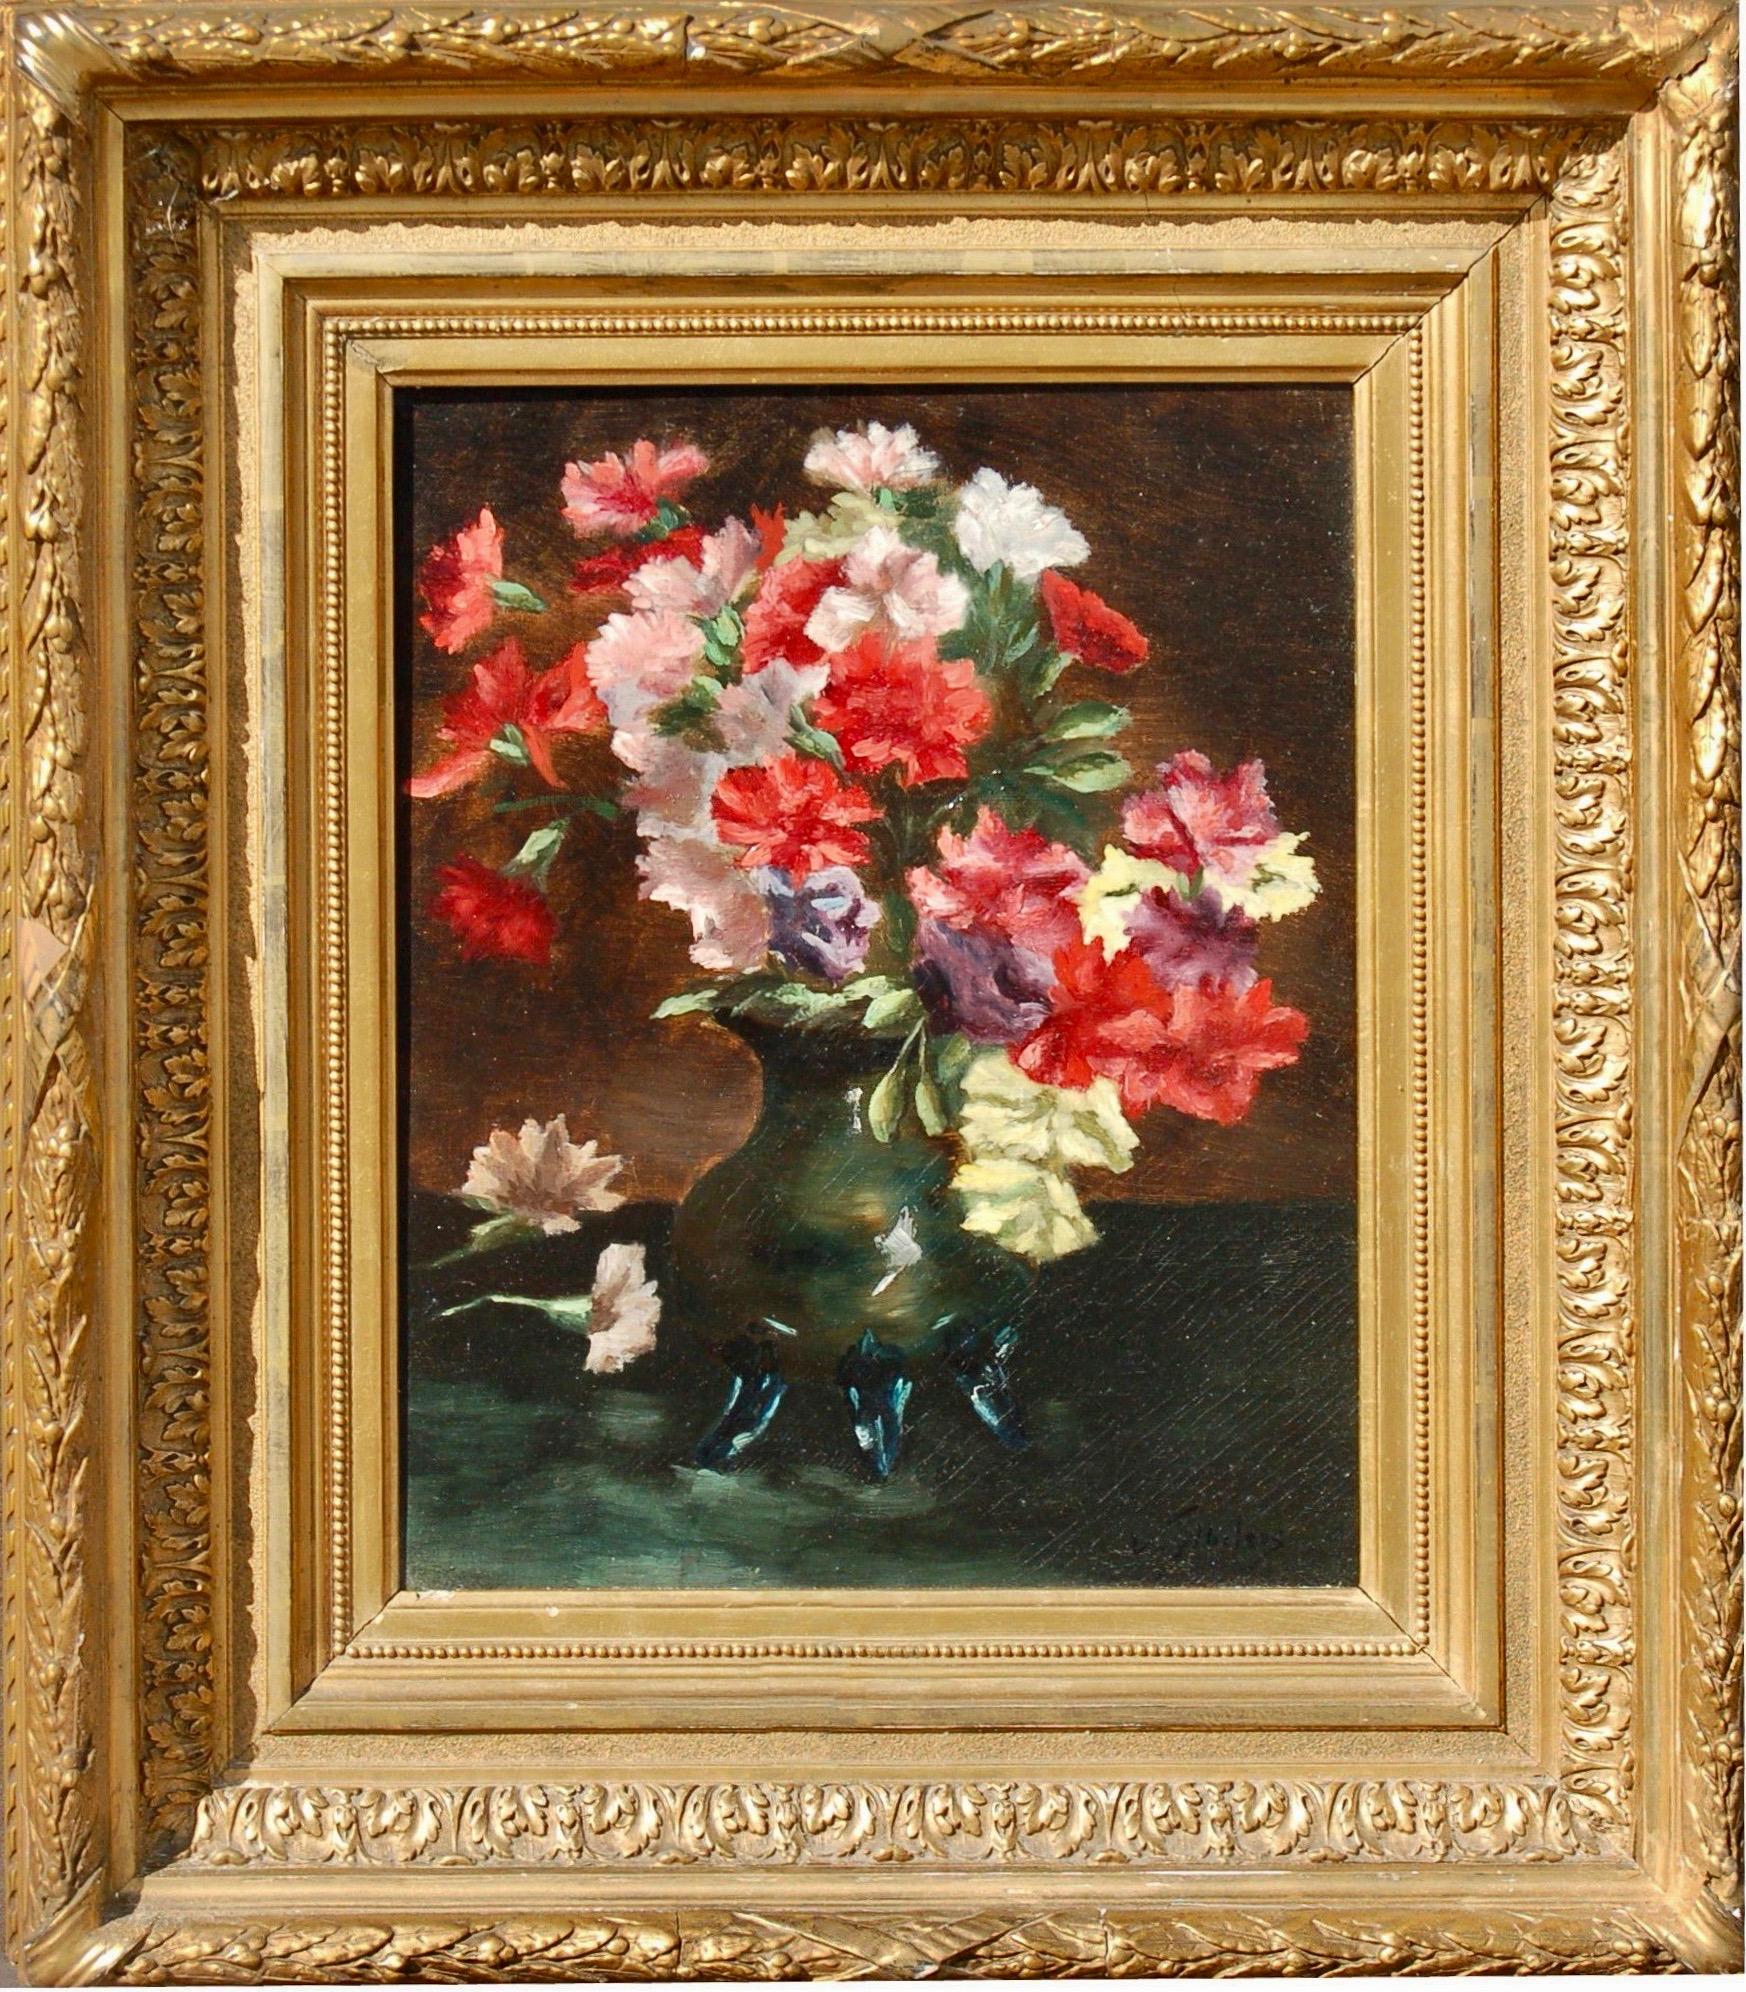 Abeloos, Victor Still-Life Painting - 20th century Belgium oil, still-life of flowers, carnations in a vase.